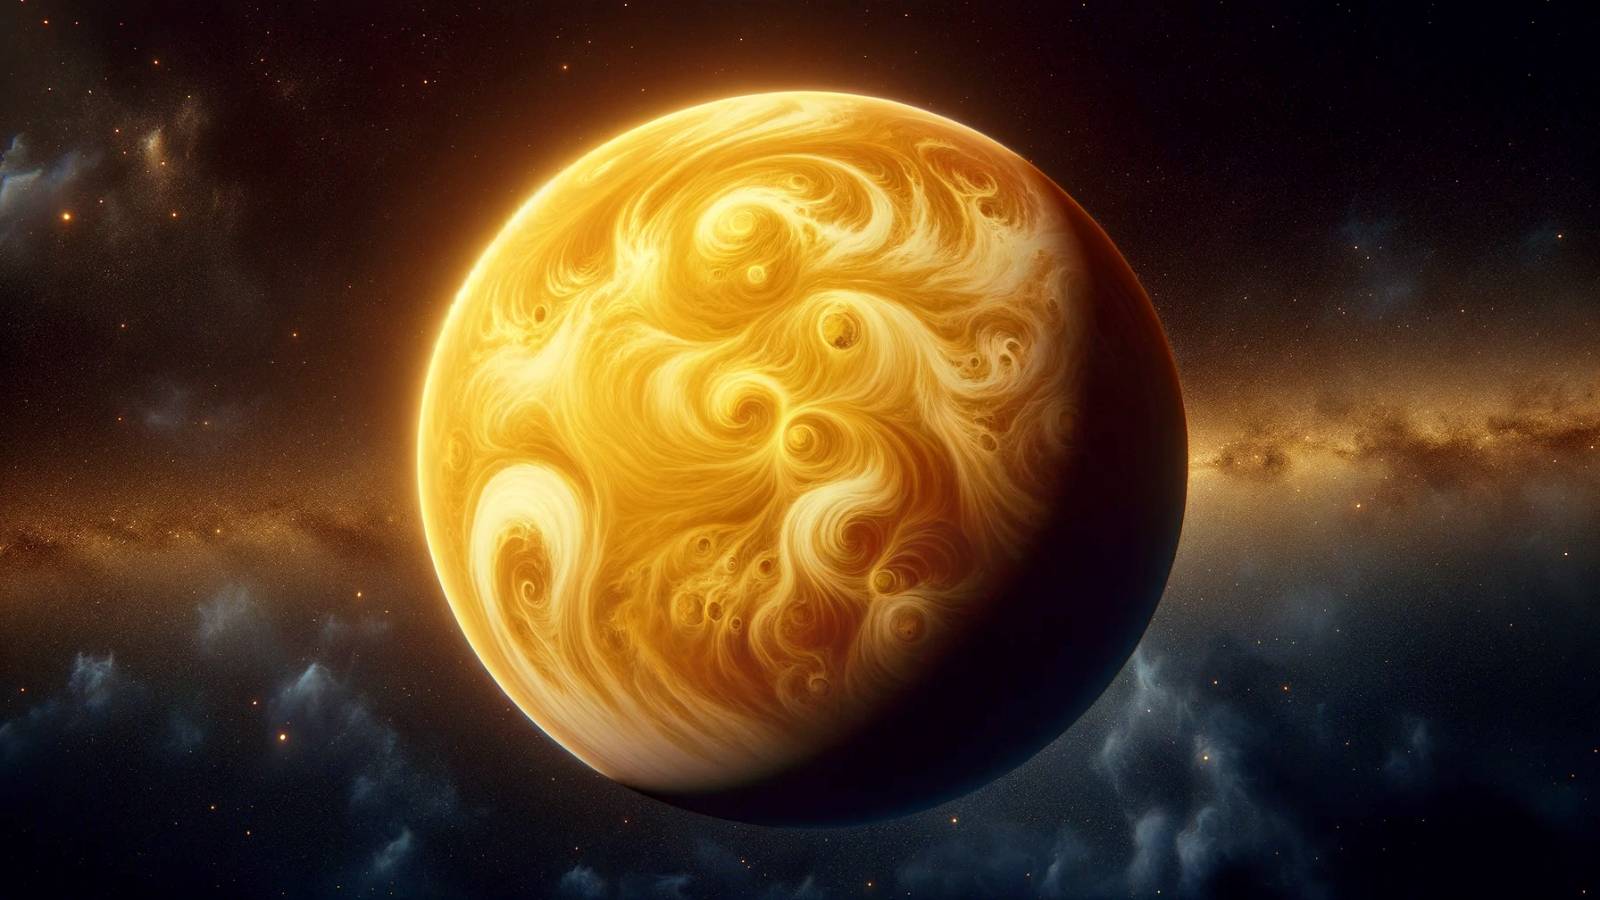 Planeten Venus har en kold atmosfære